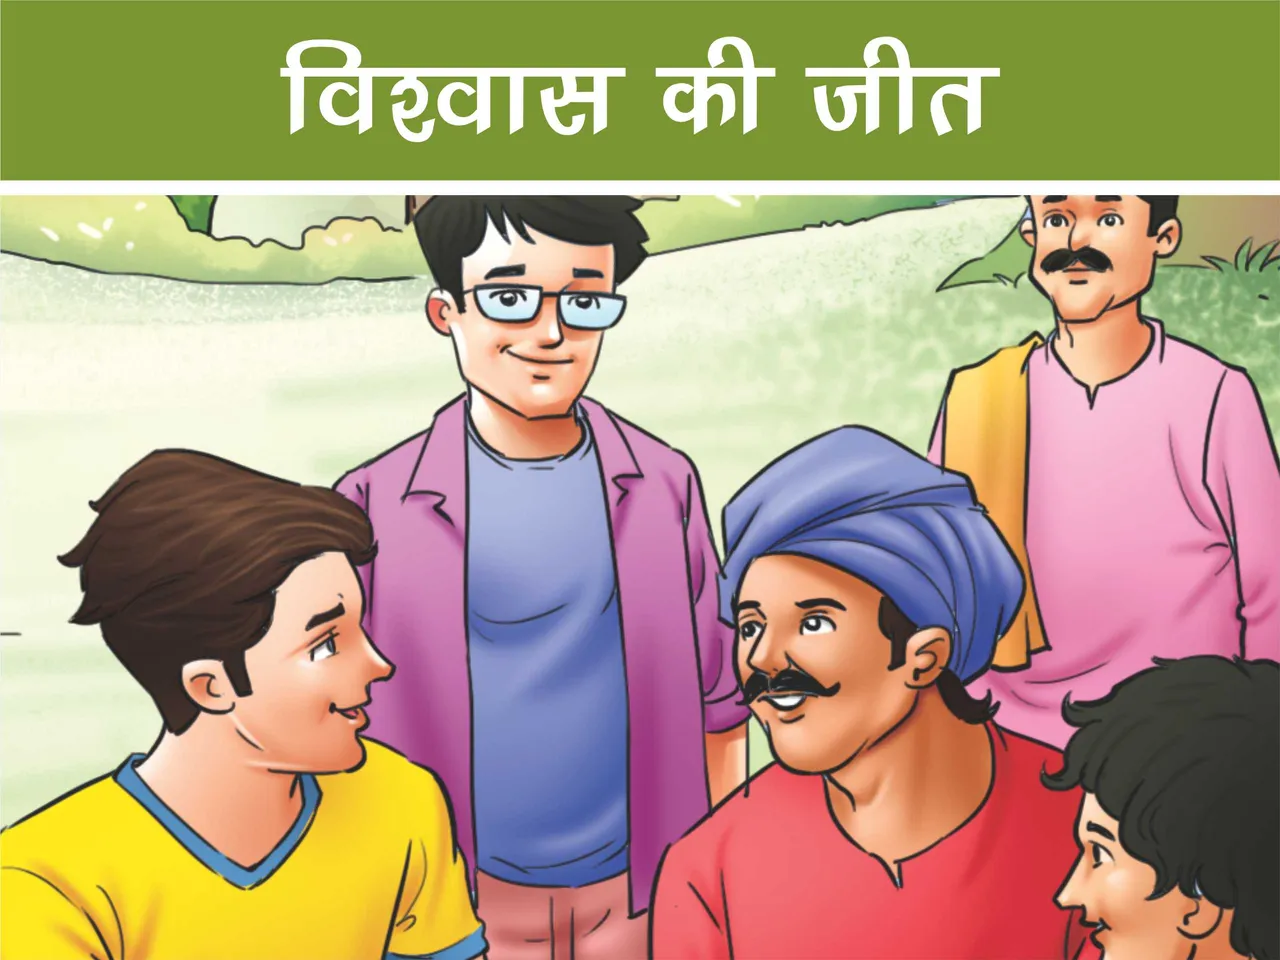 Cartoon image of city guys in village